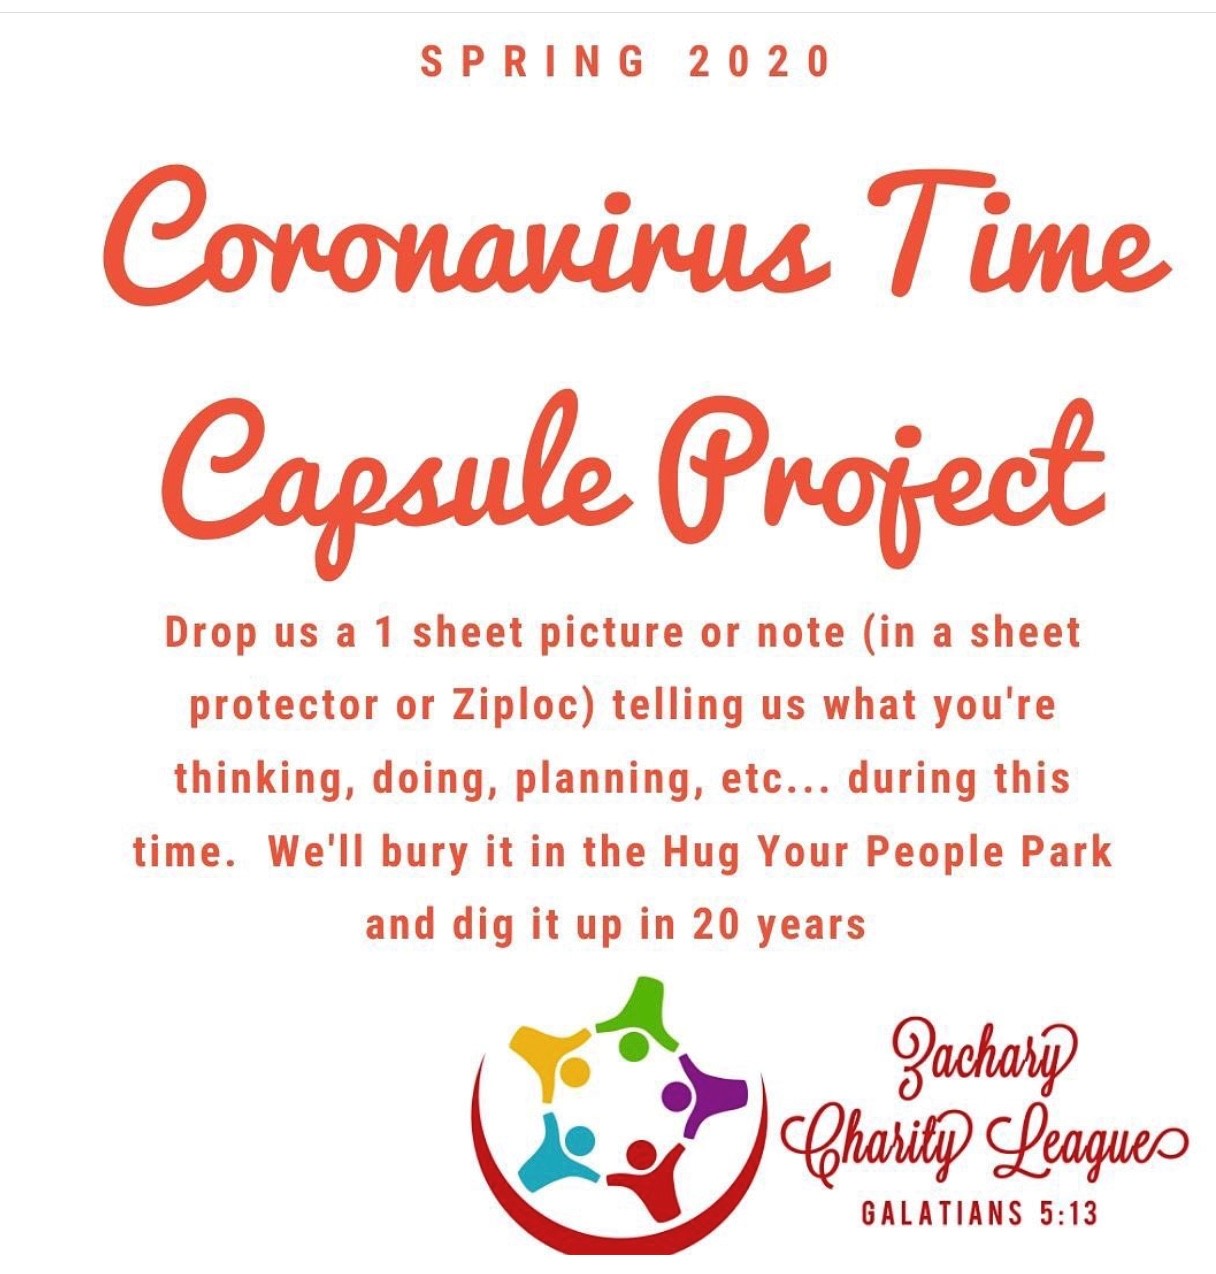 Coronavirus Time Capsule Project